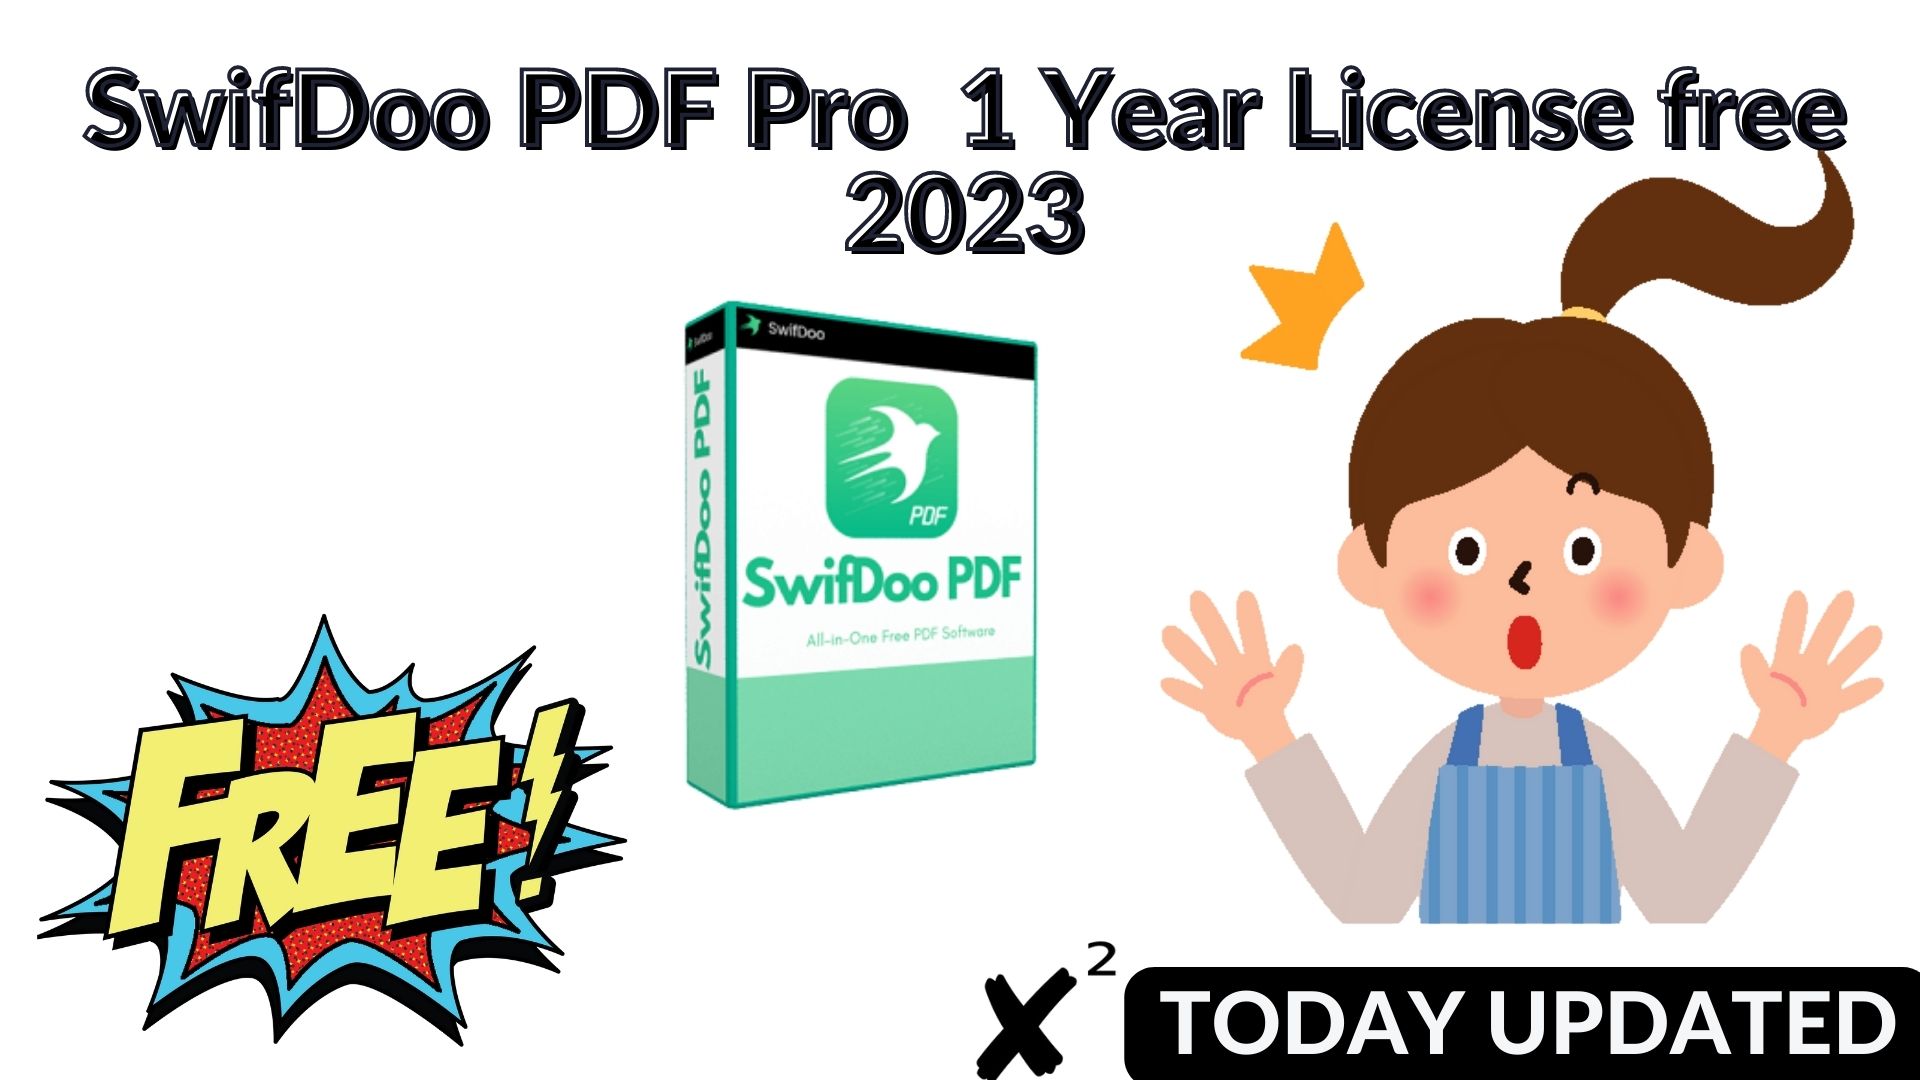 Swifdoo pdf pro 1 year license free 2023